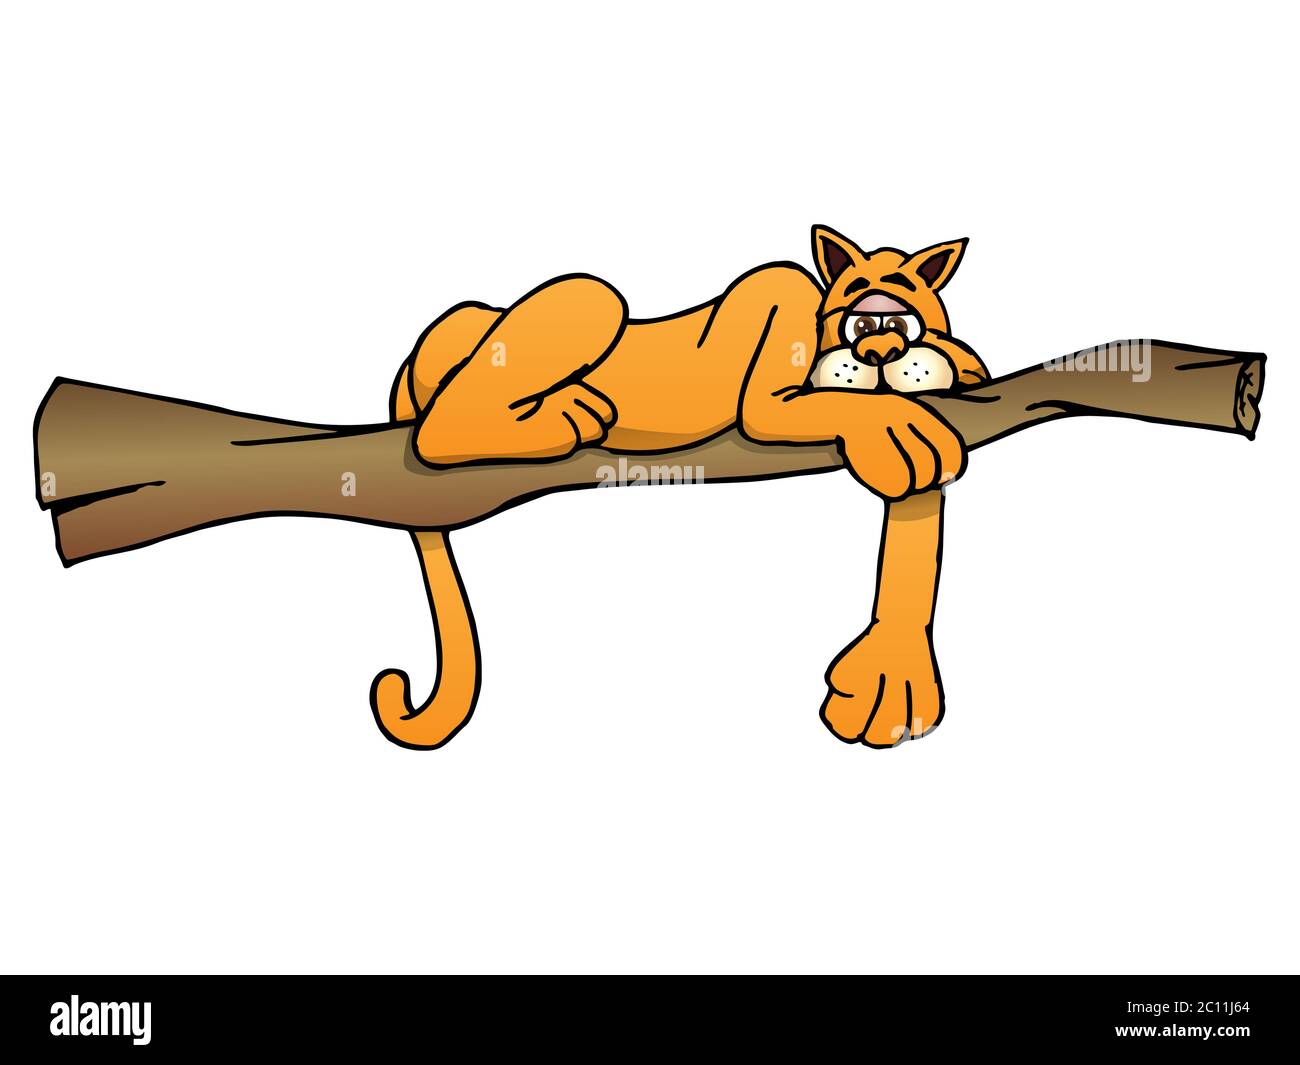 Cute Safari sleepy puma sleeping on branch Stock Photo - Alamy